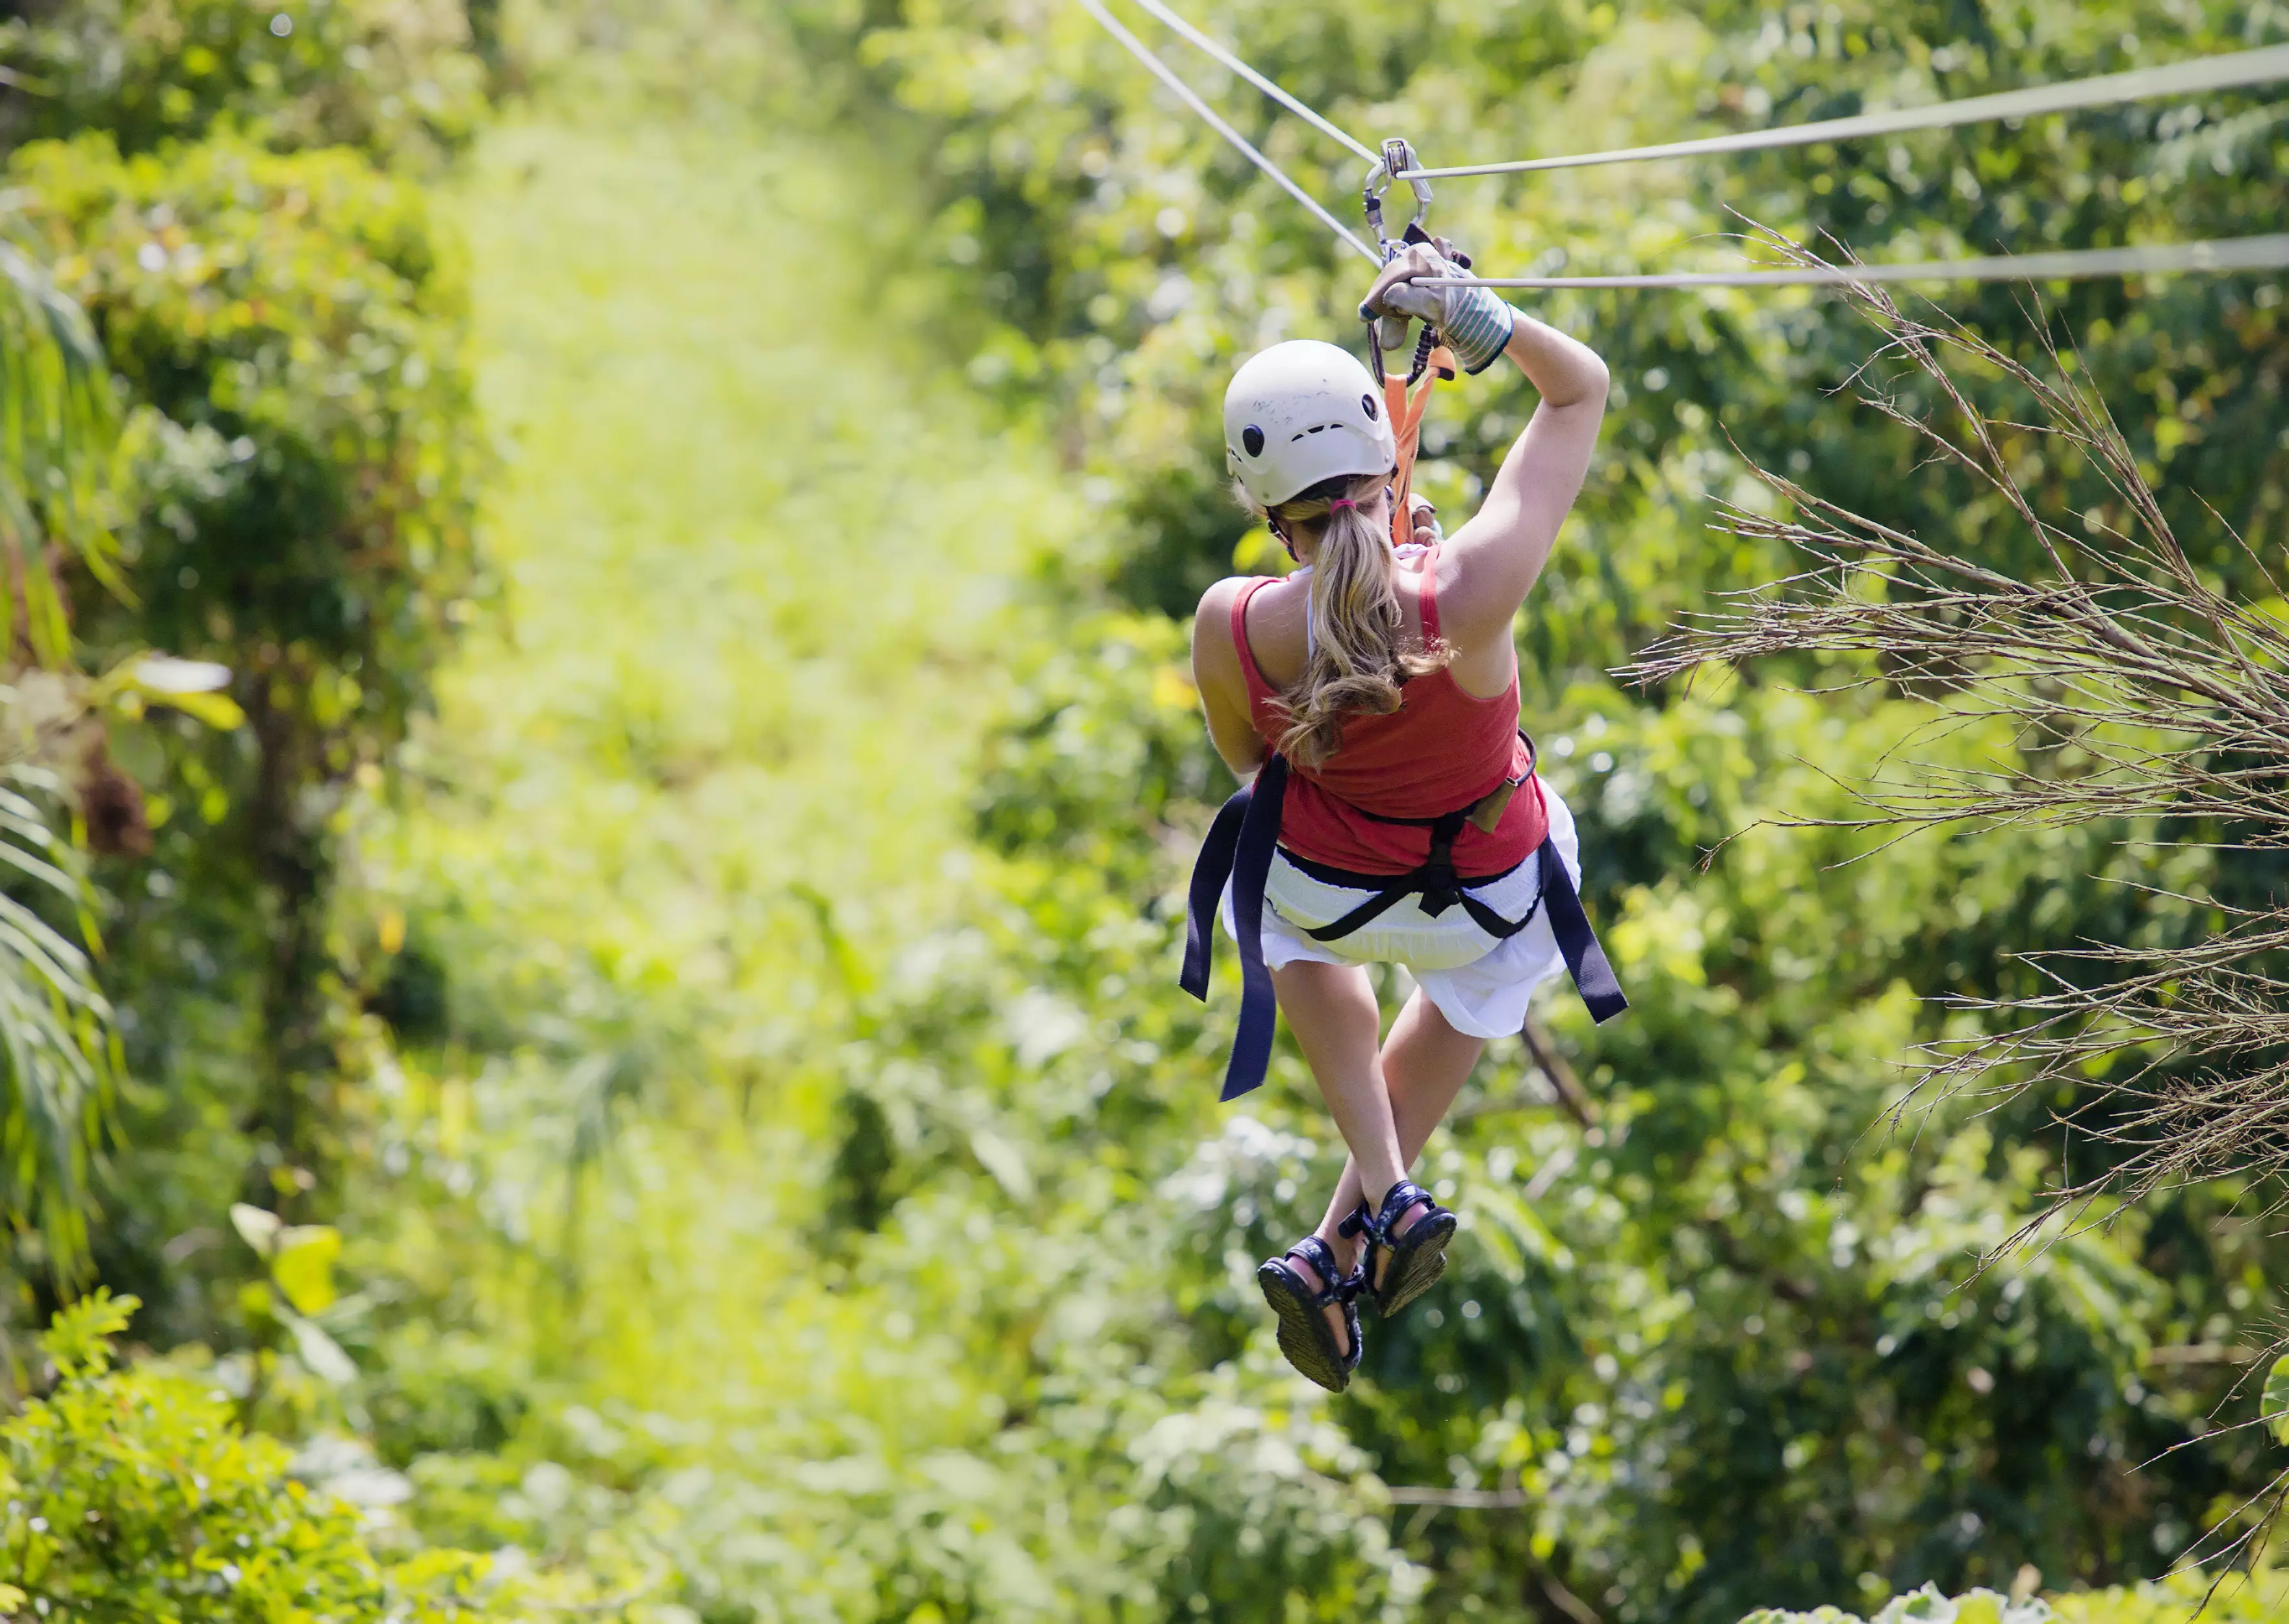 Zip-lining in Selvatura Park in Costa Rica